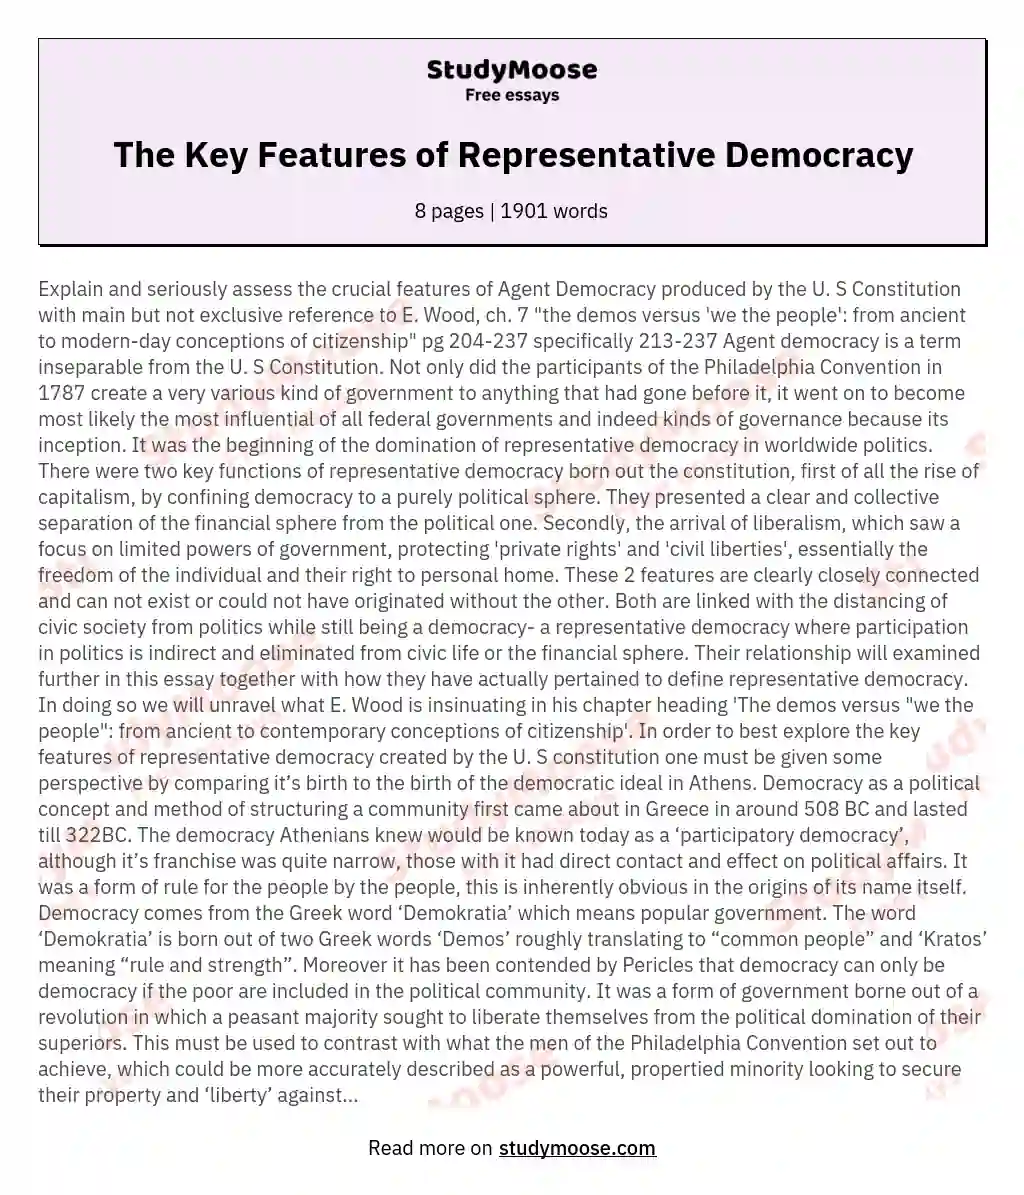 The Key Features of Representative Democracy essay